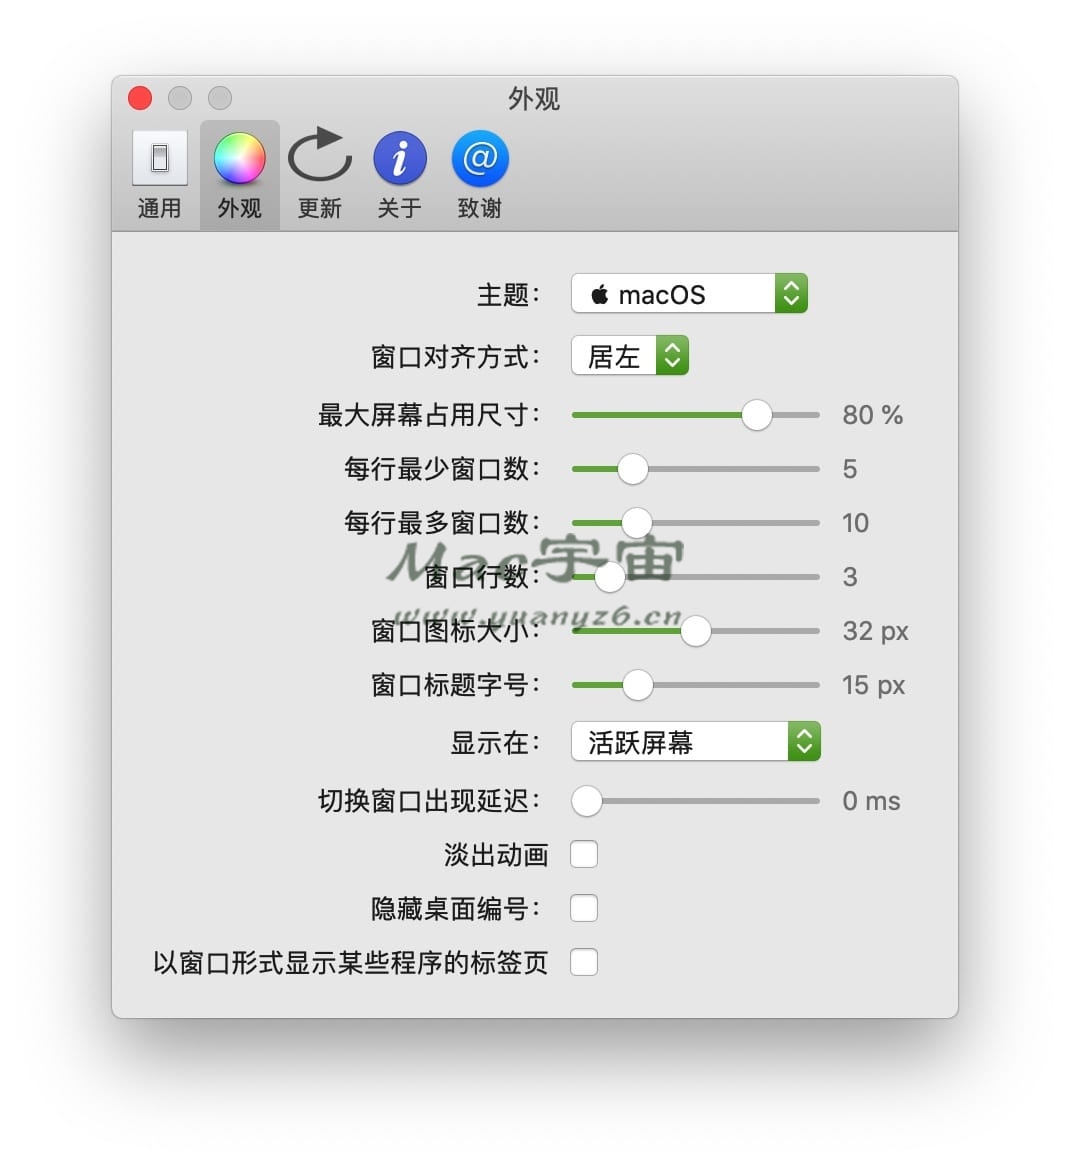 AltTab for Mac v6.69.0 中文版 窗口快速切换利器 苹果电脑